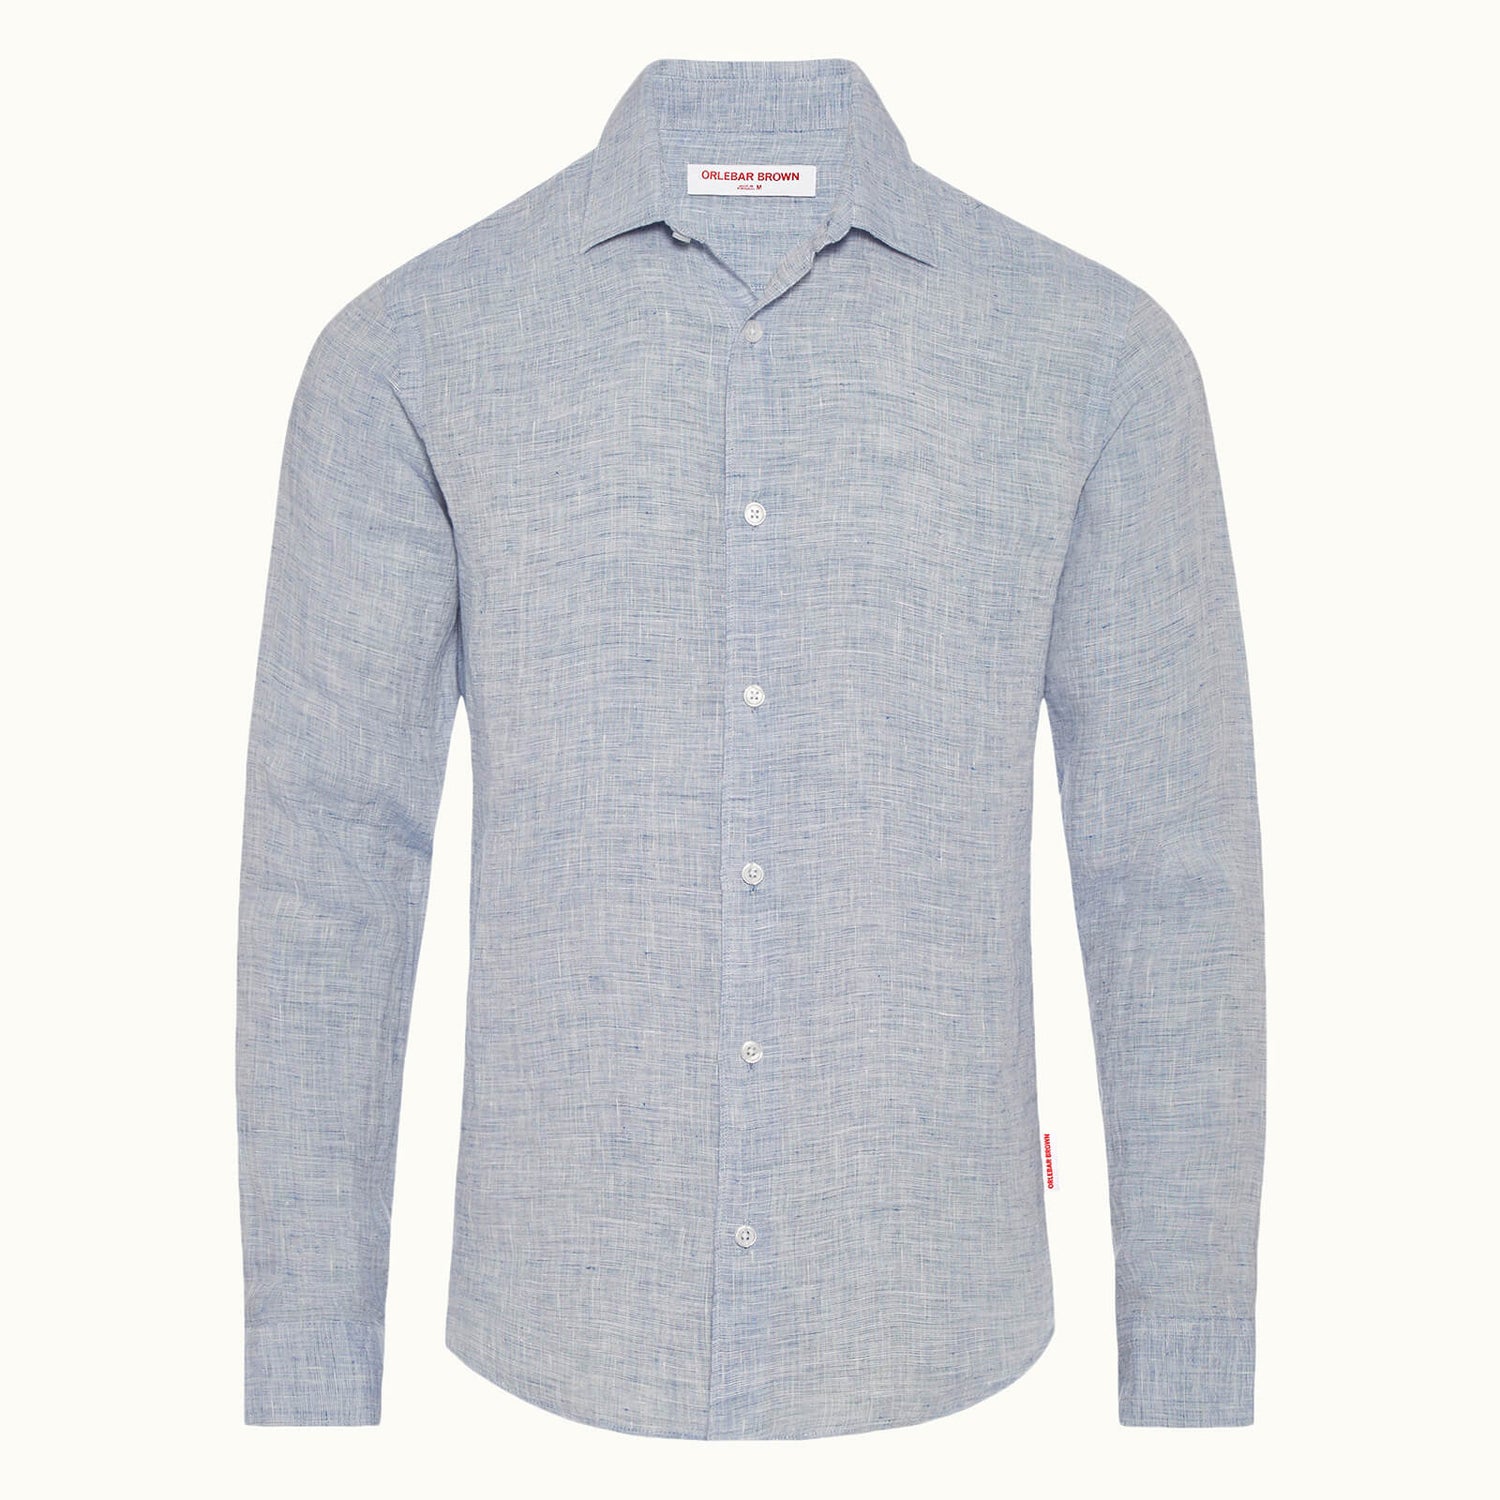 Giles Linen 系列定制款衬衫-海军蓝/白色